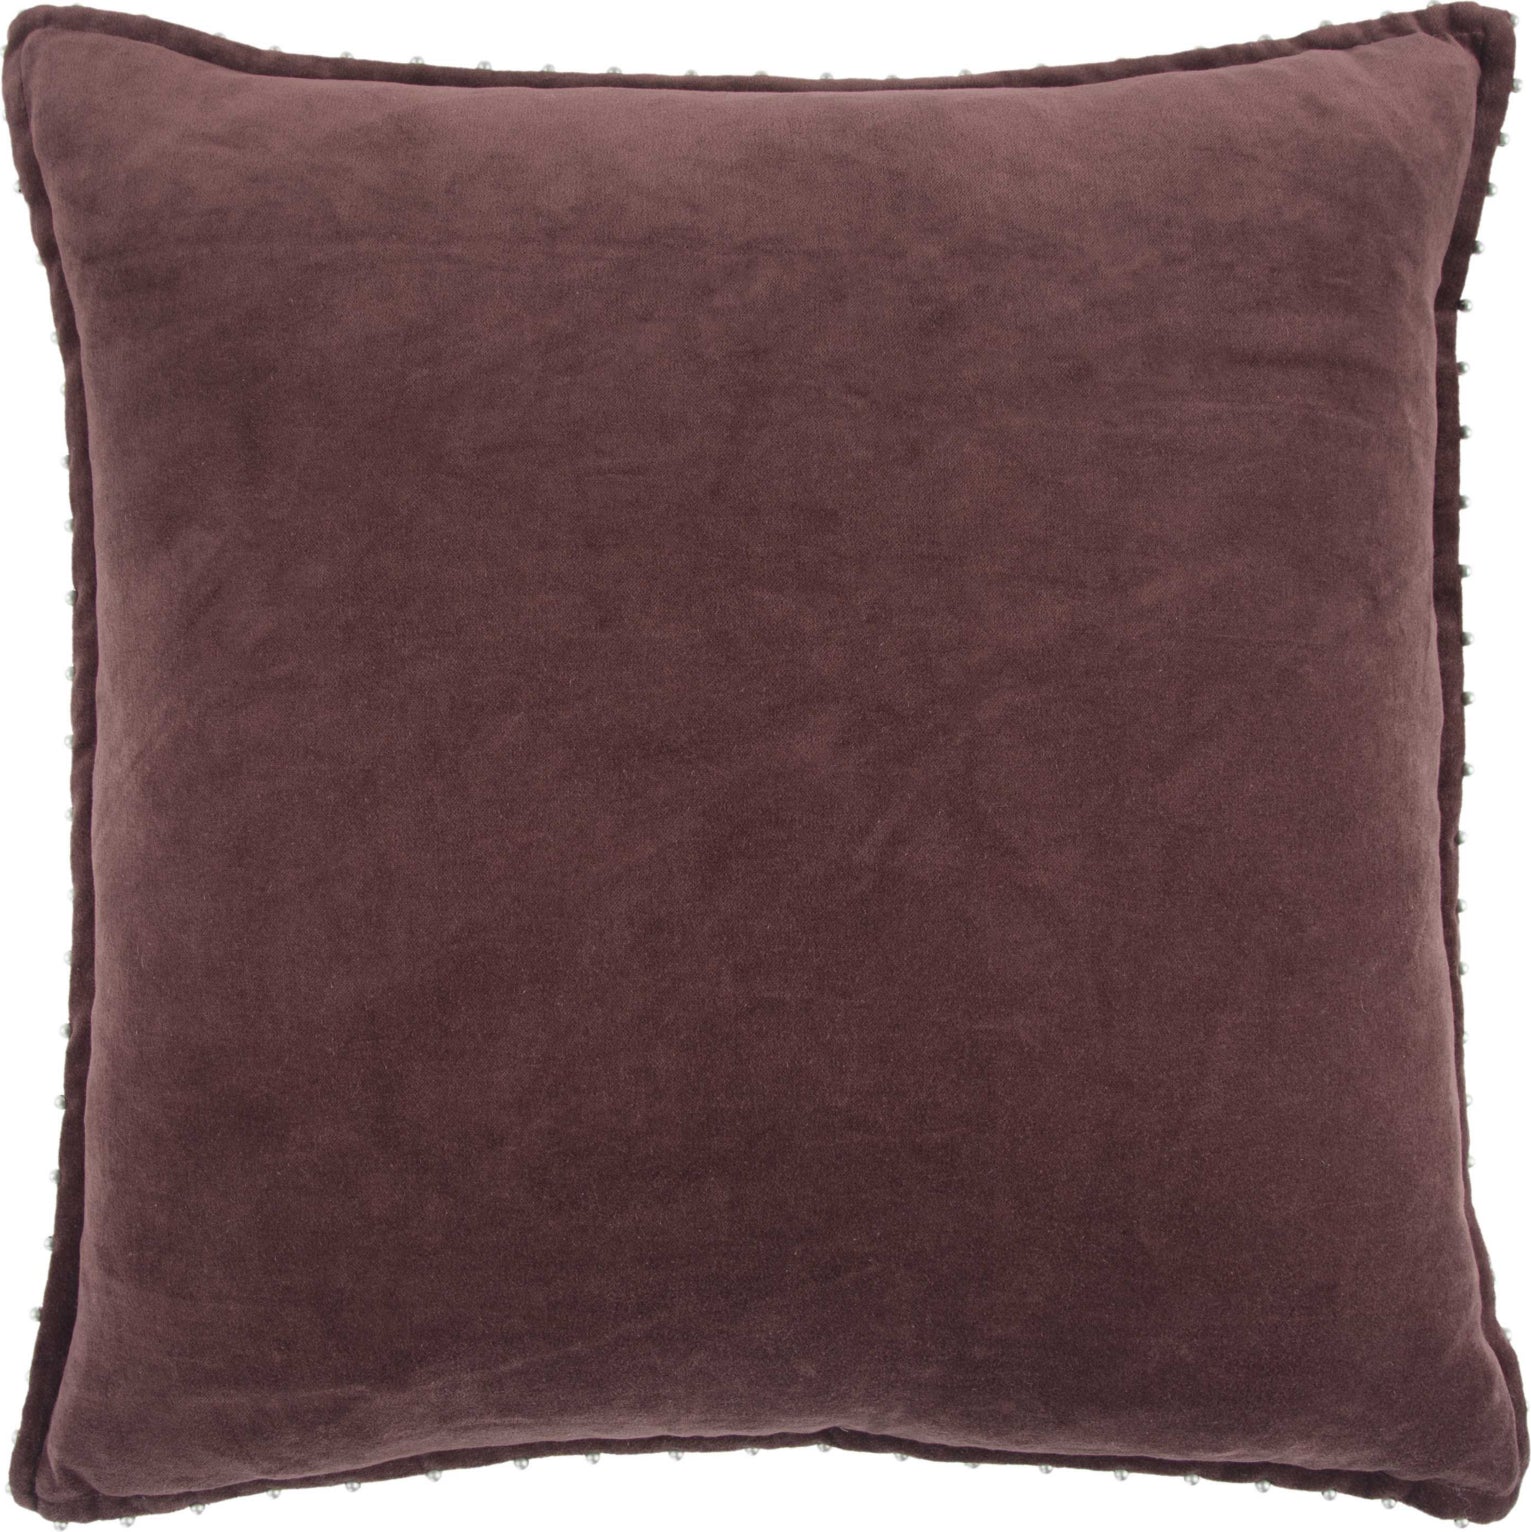 Rizzy Pillows T13192 Burgundy